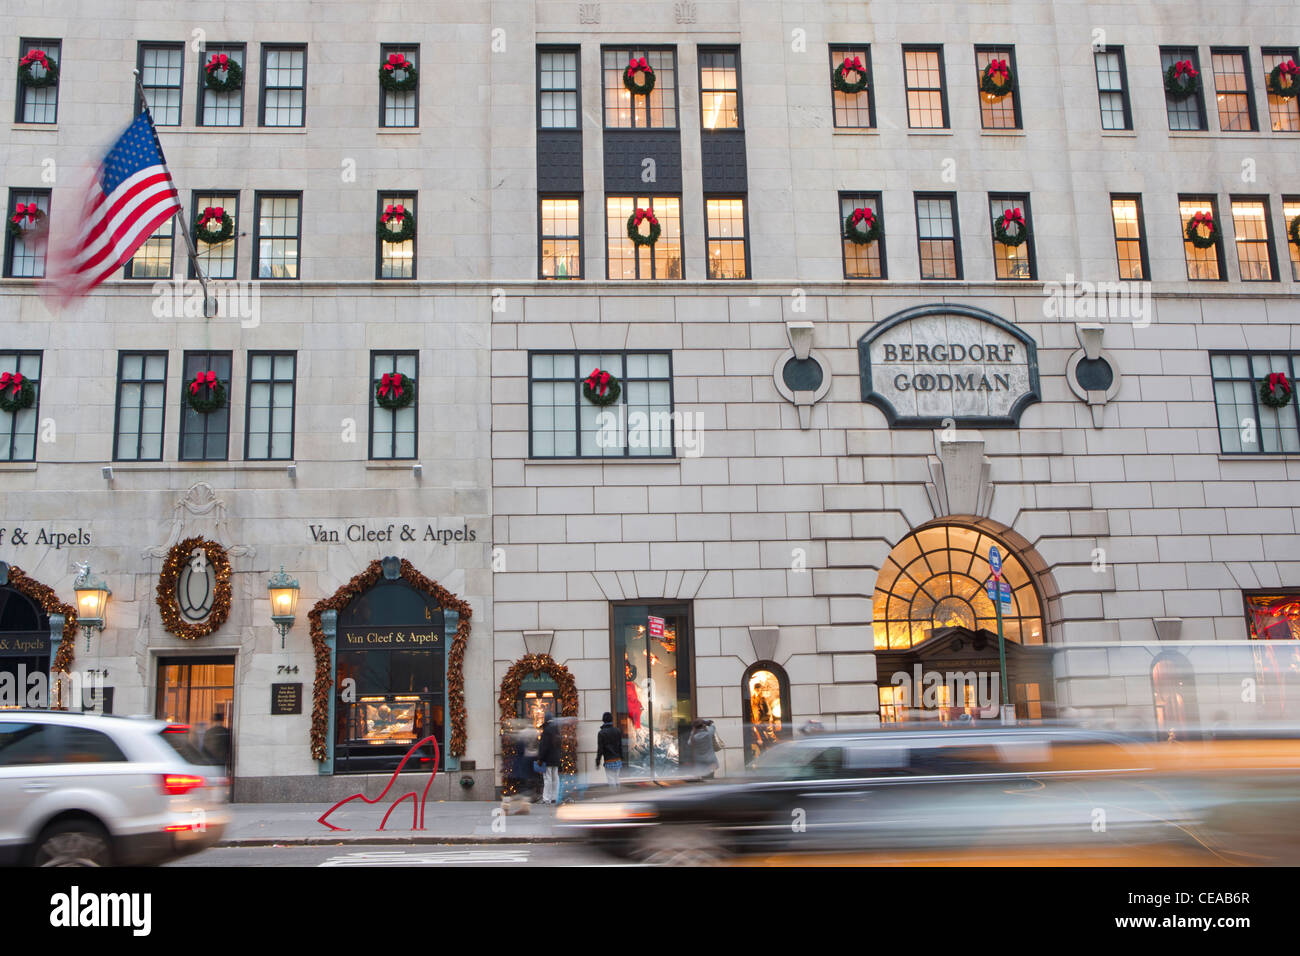 File:Bergdorf Goodman window on Fifth Avenue New York City.jpg - Wikipedia